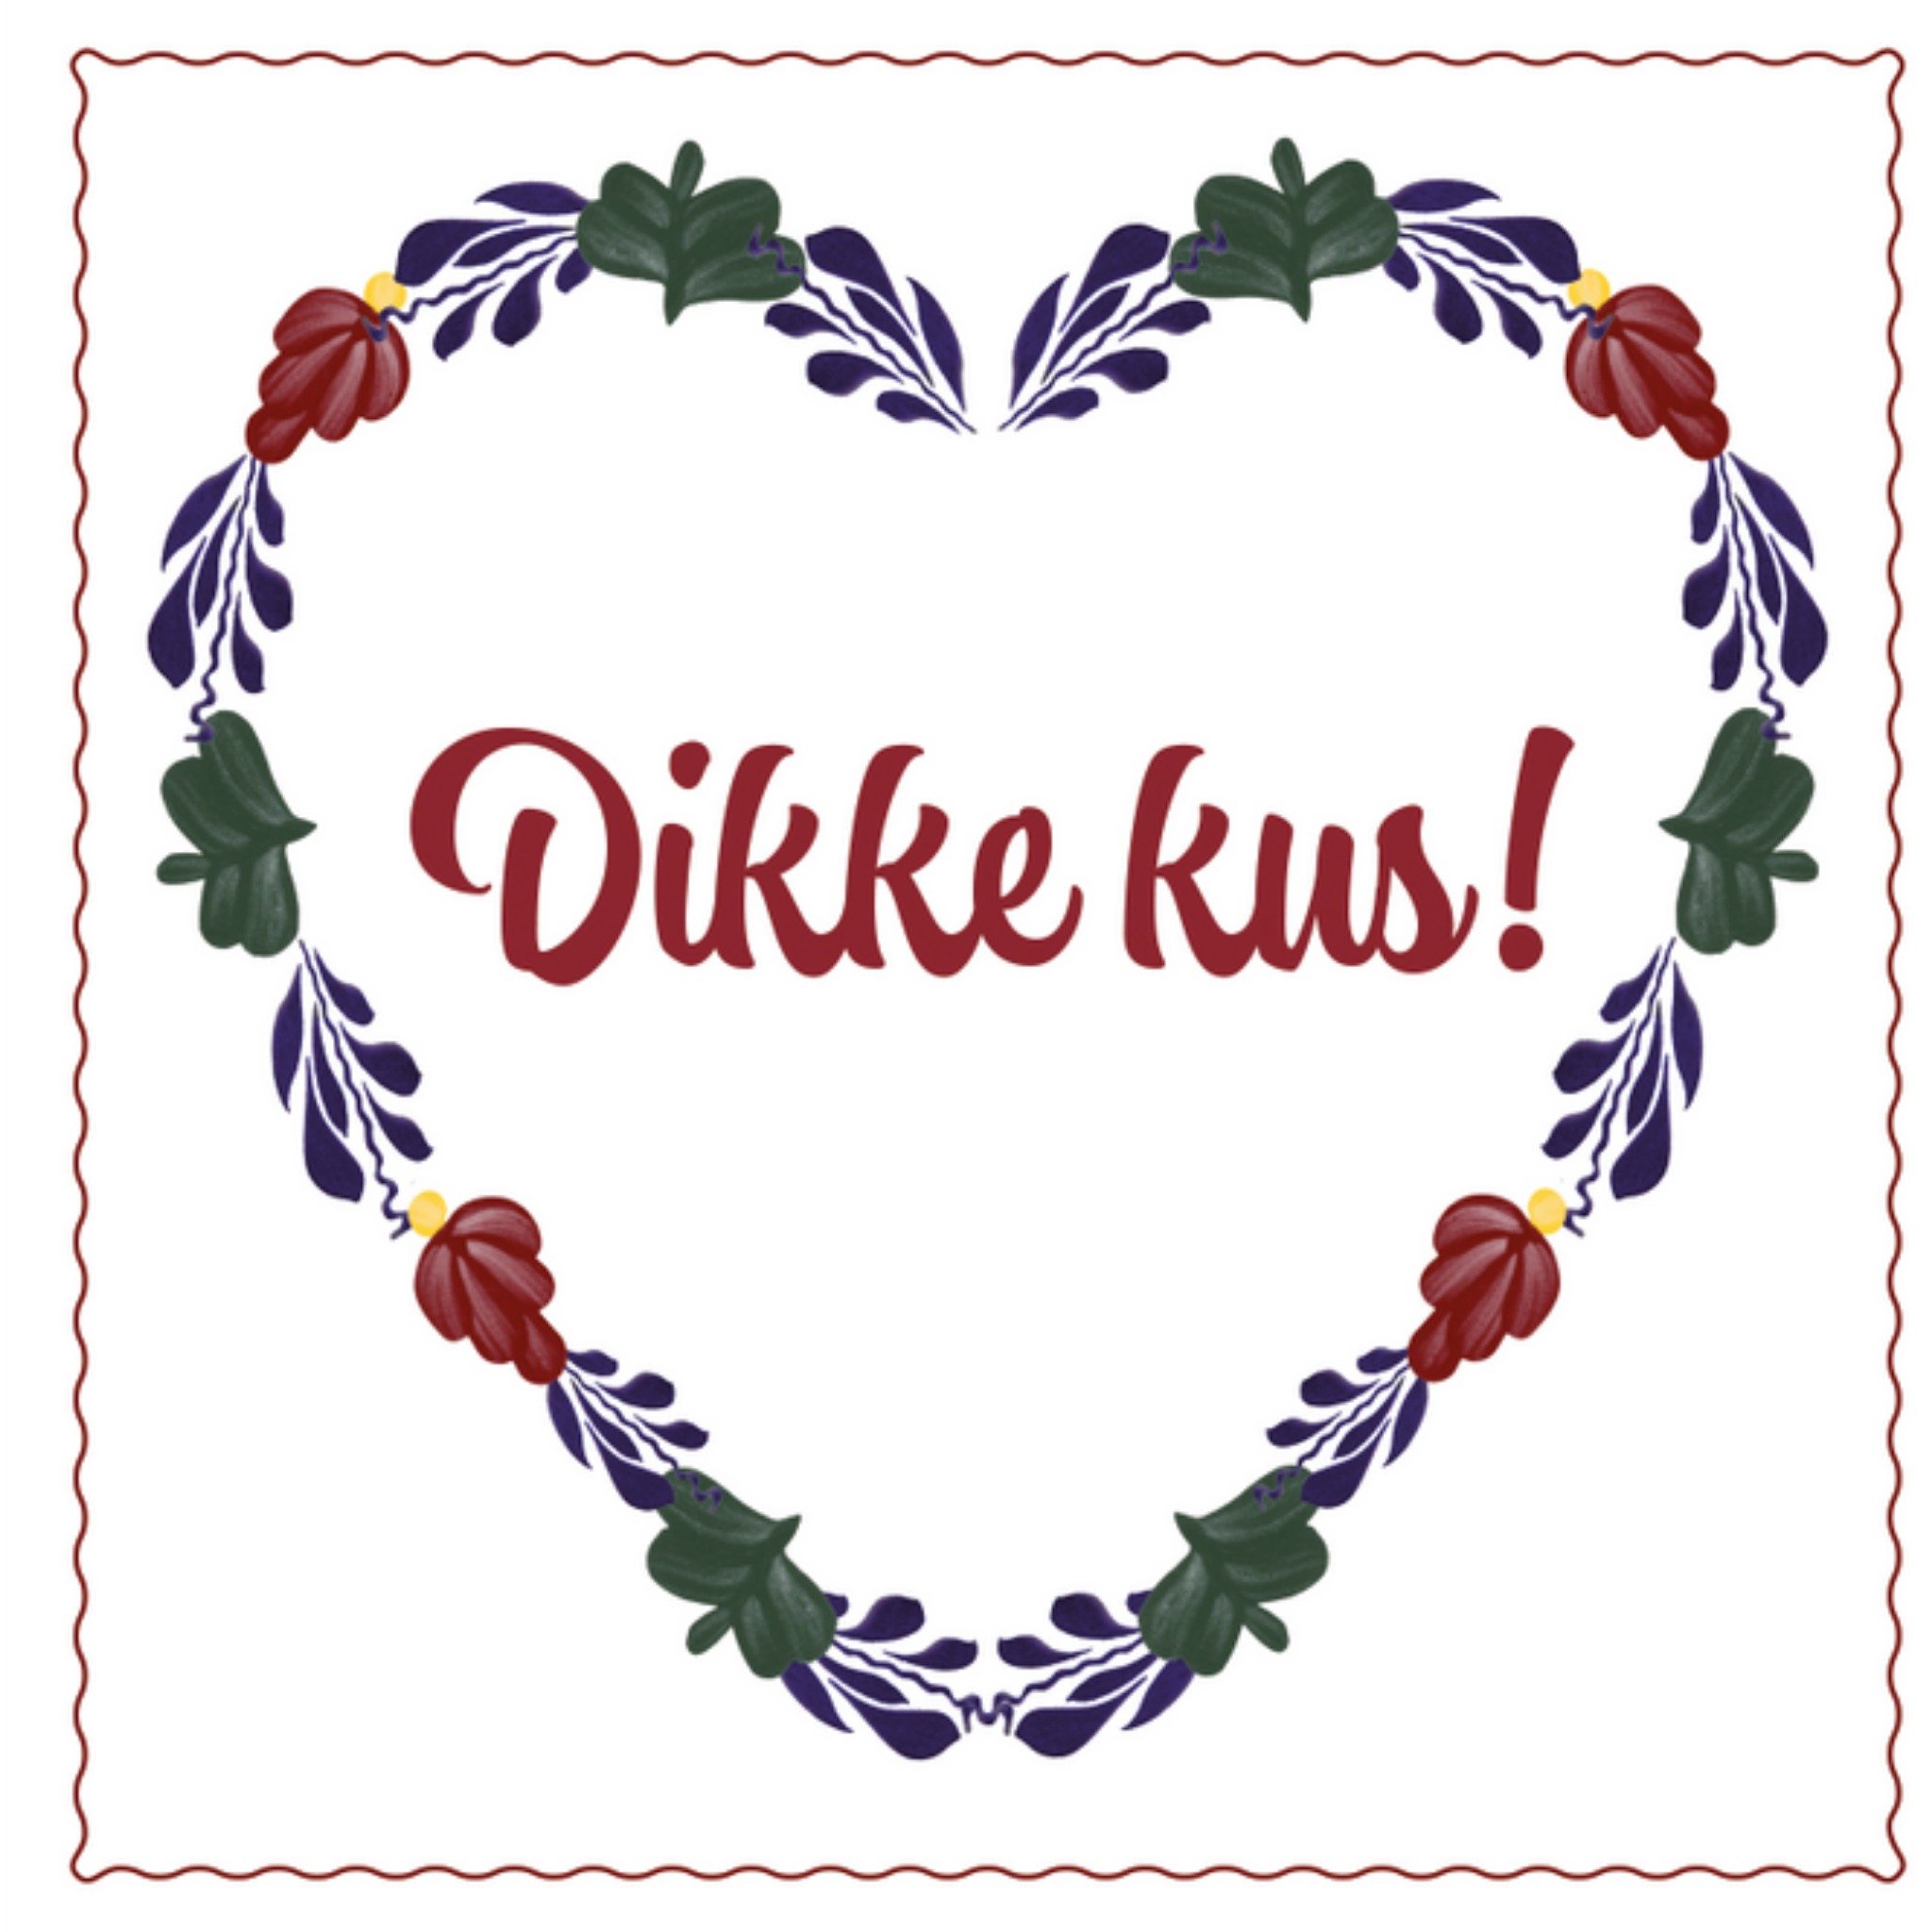 Boerenbont - Valentijnskaart - Dikke kus!